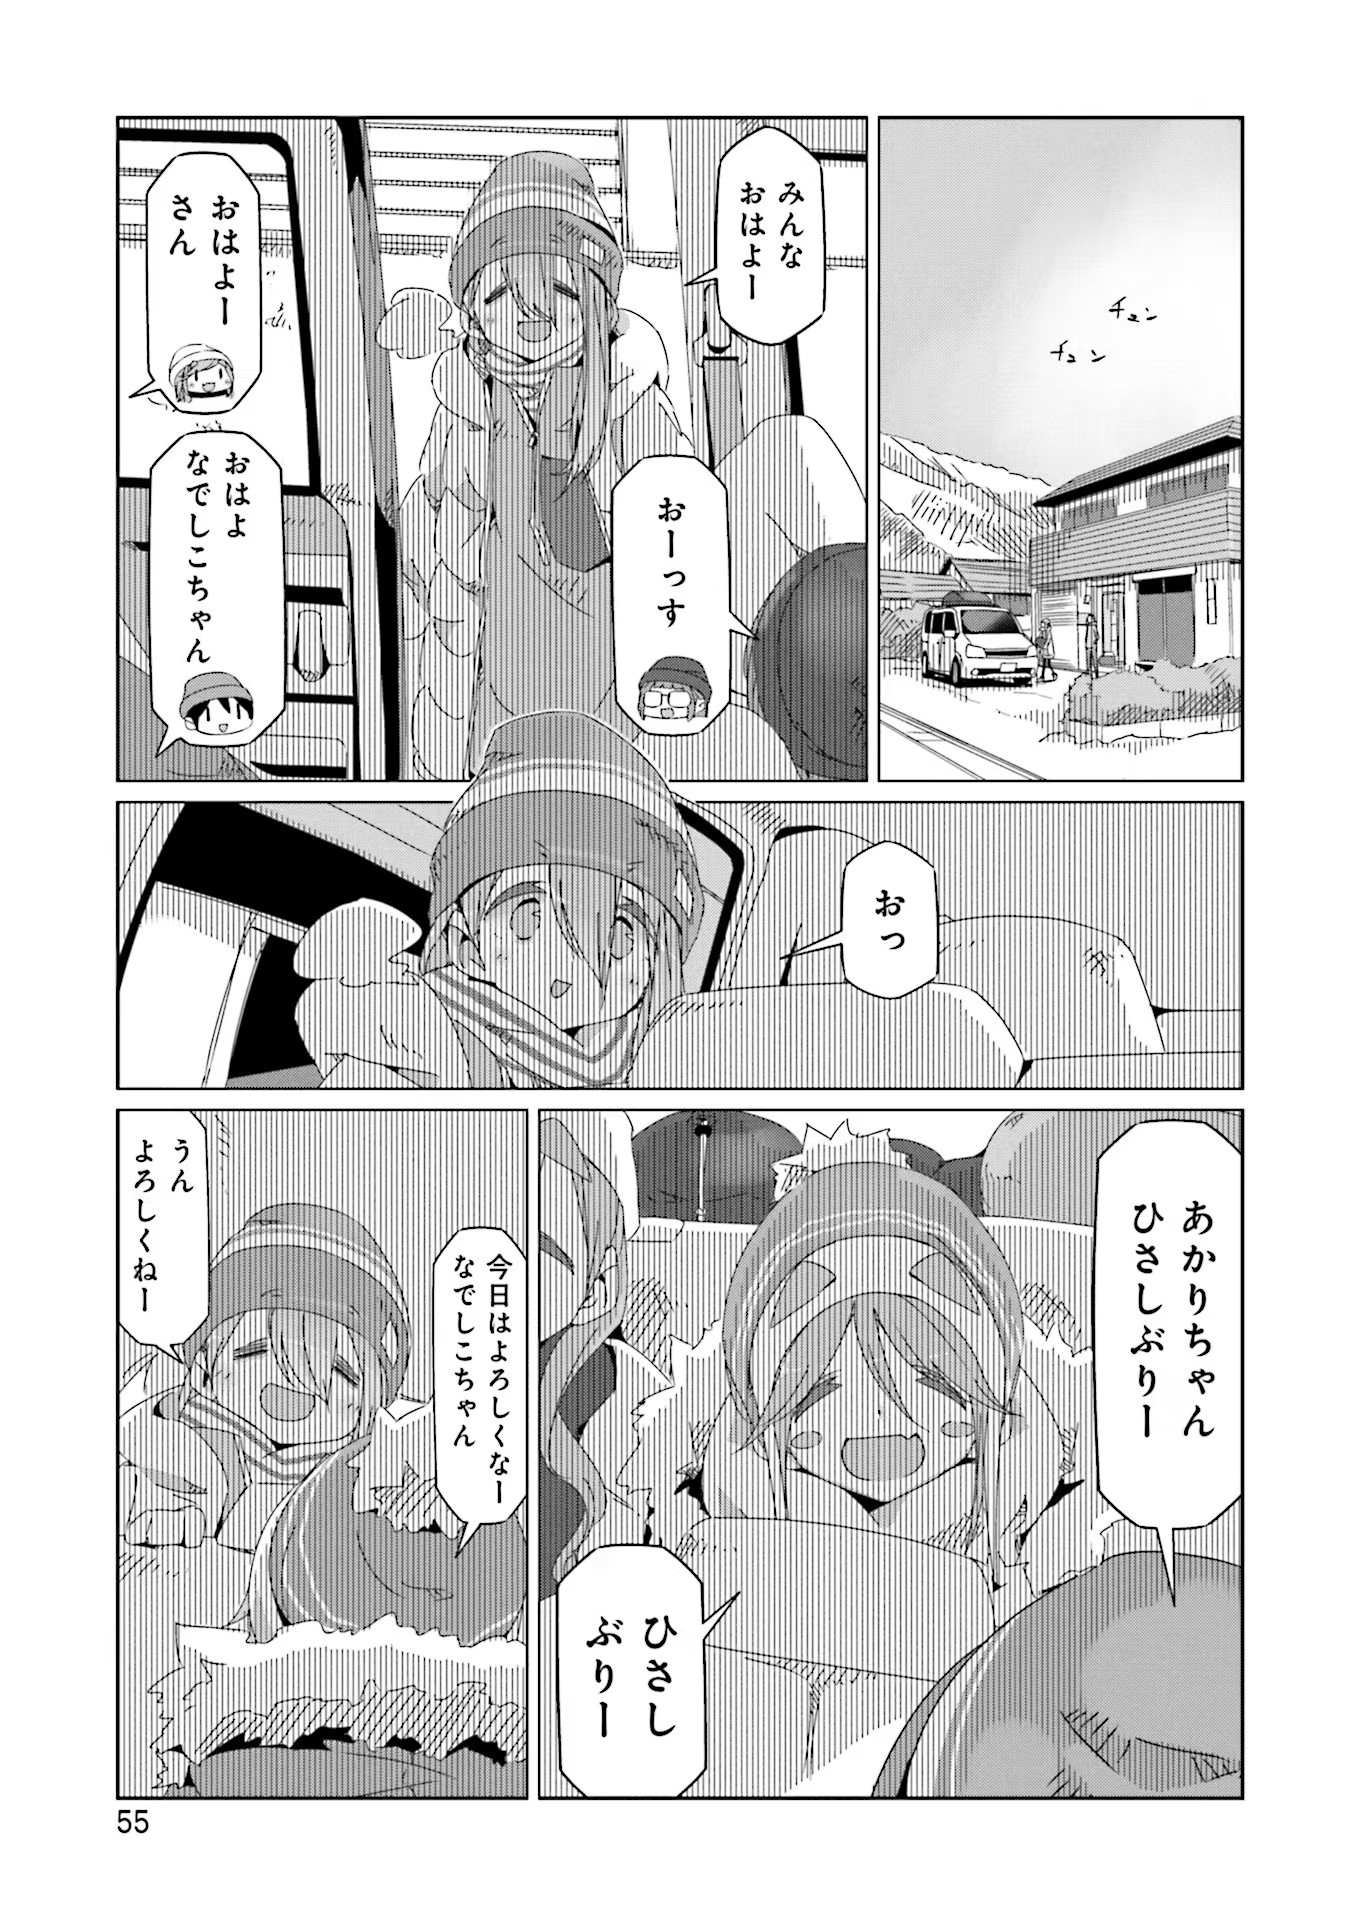 Yuru Camp - Chapter 43 - Page 1